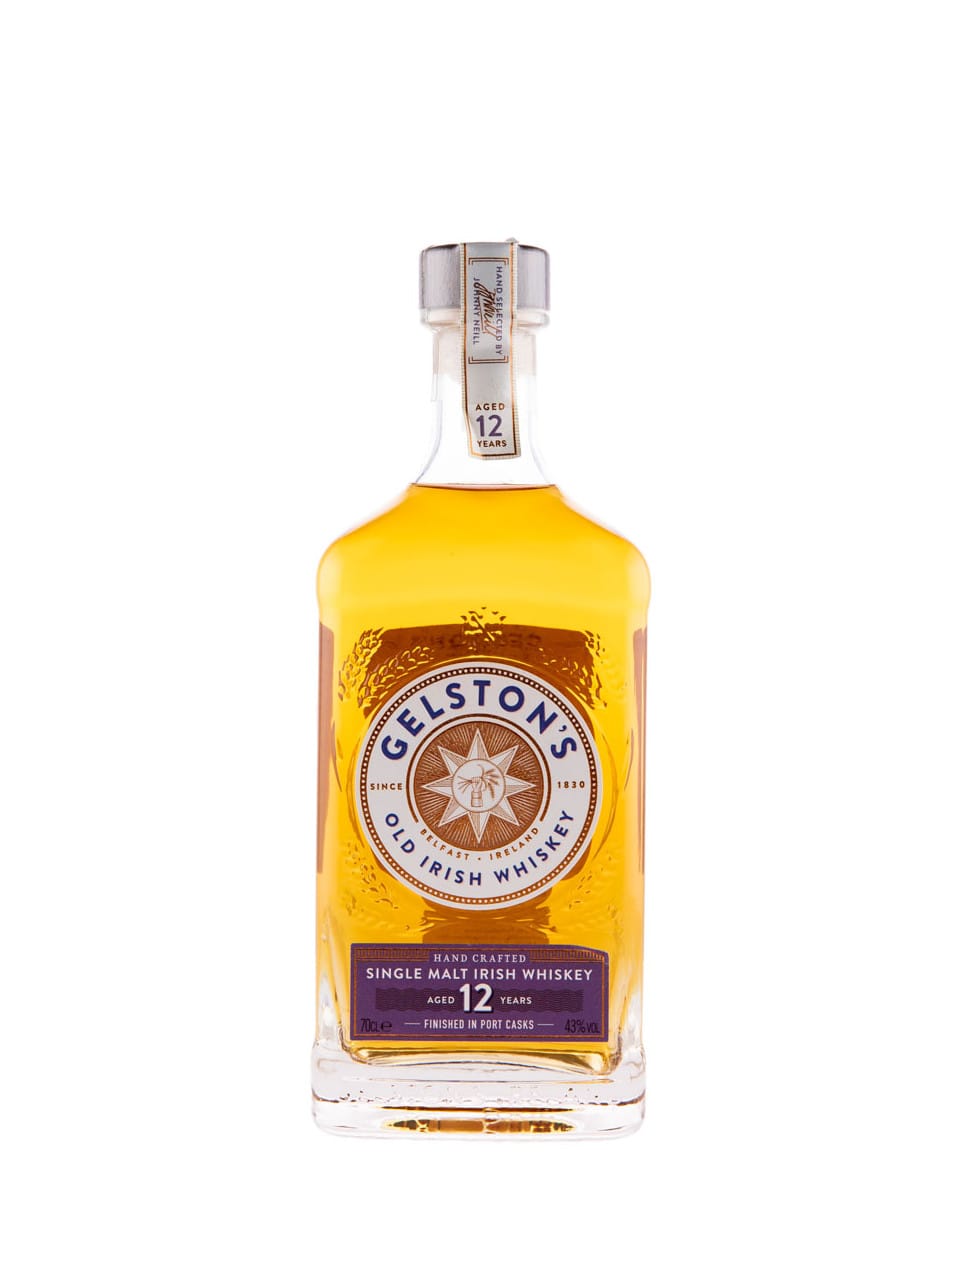 Gelston's Rum Whiskey 12 Ani